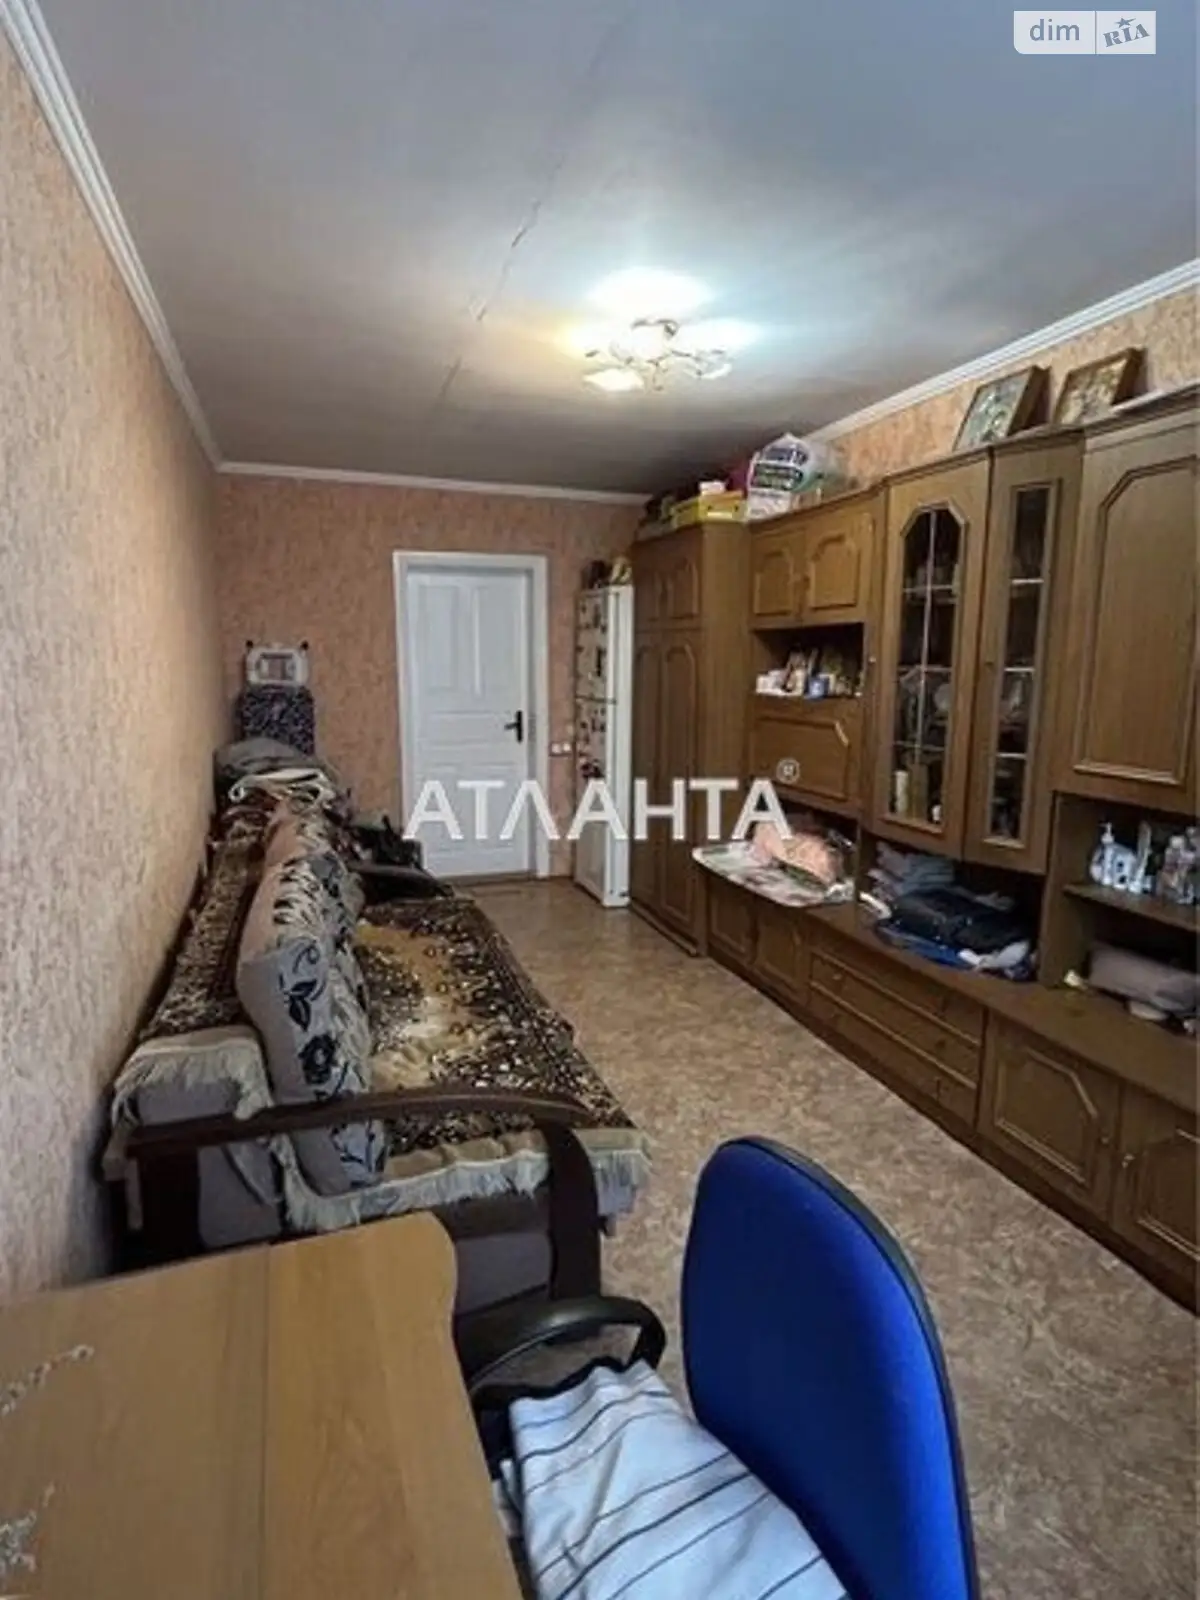 Продается комната 15 кв. м в Одессе, цена: 9500 $ - фото 1